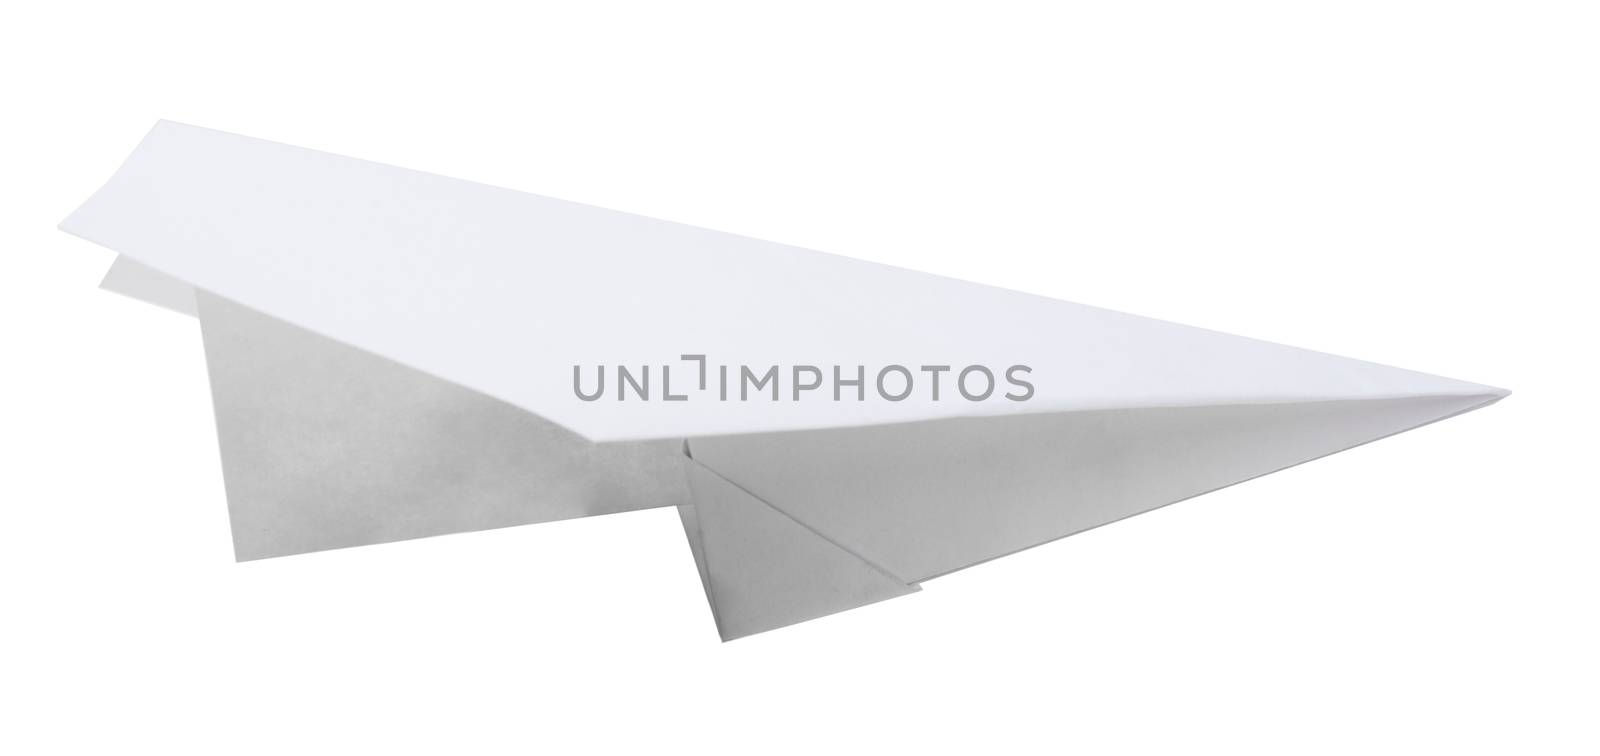 Paper plane on white by cherezoff